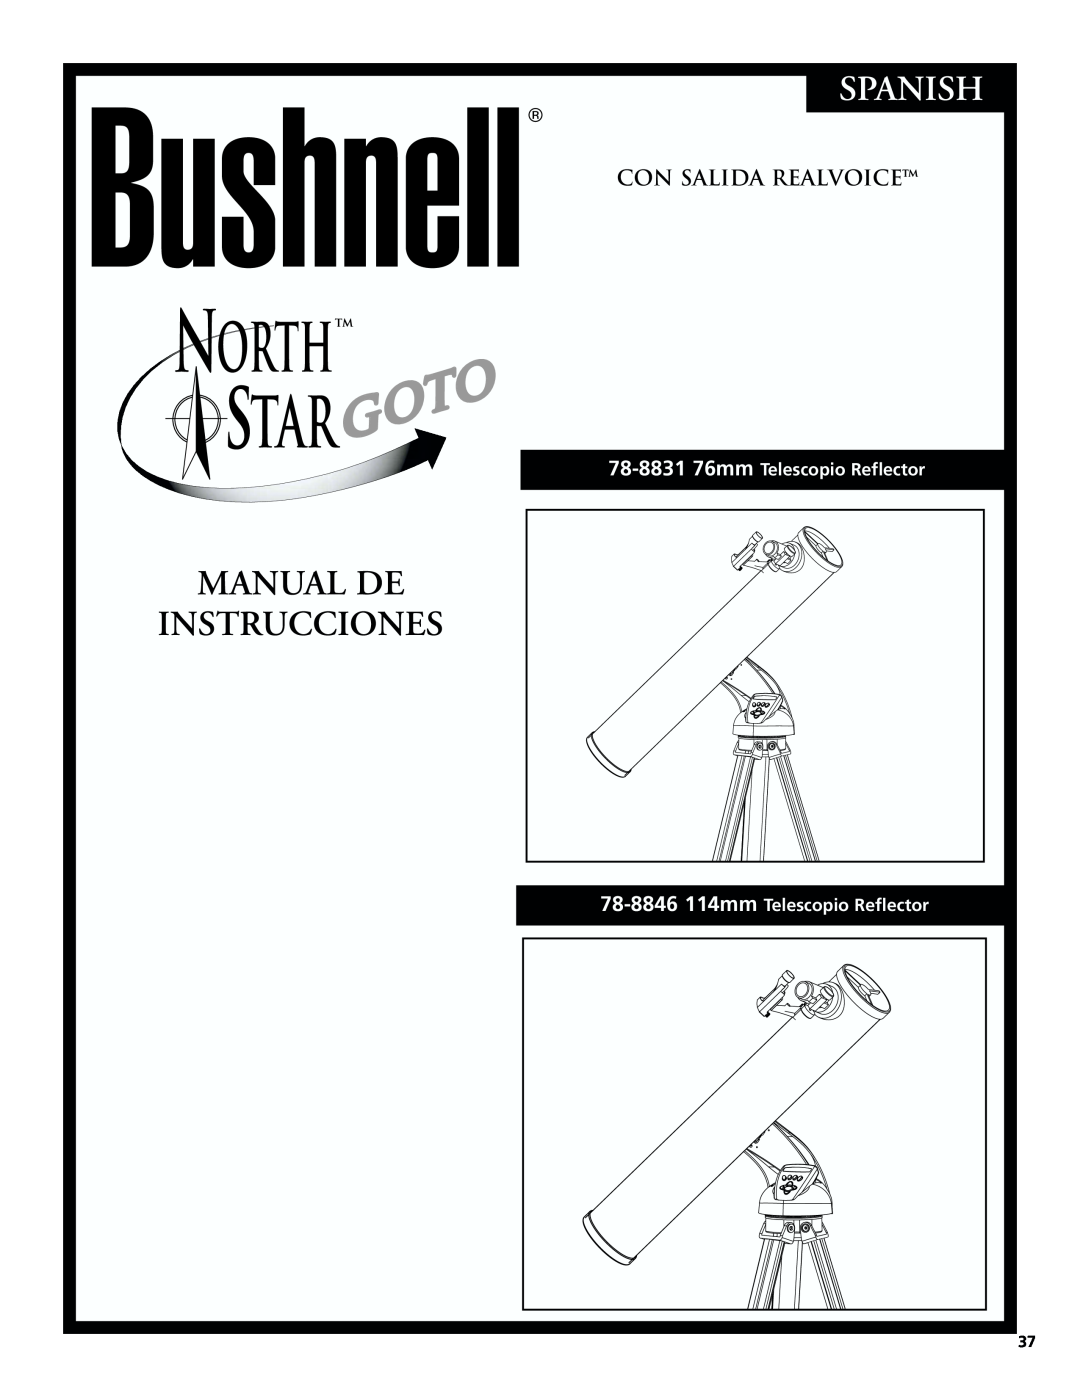 Bushnell 78-8831, 78-8846 Spanish, Manual De Instrucciones, Con Salida Realvoice, 78-8846114mm Telescopio Reflector 